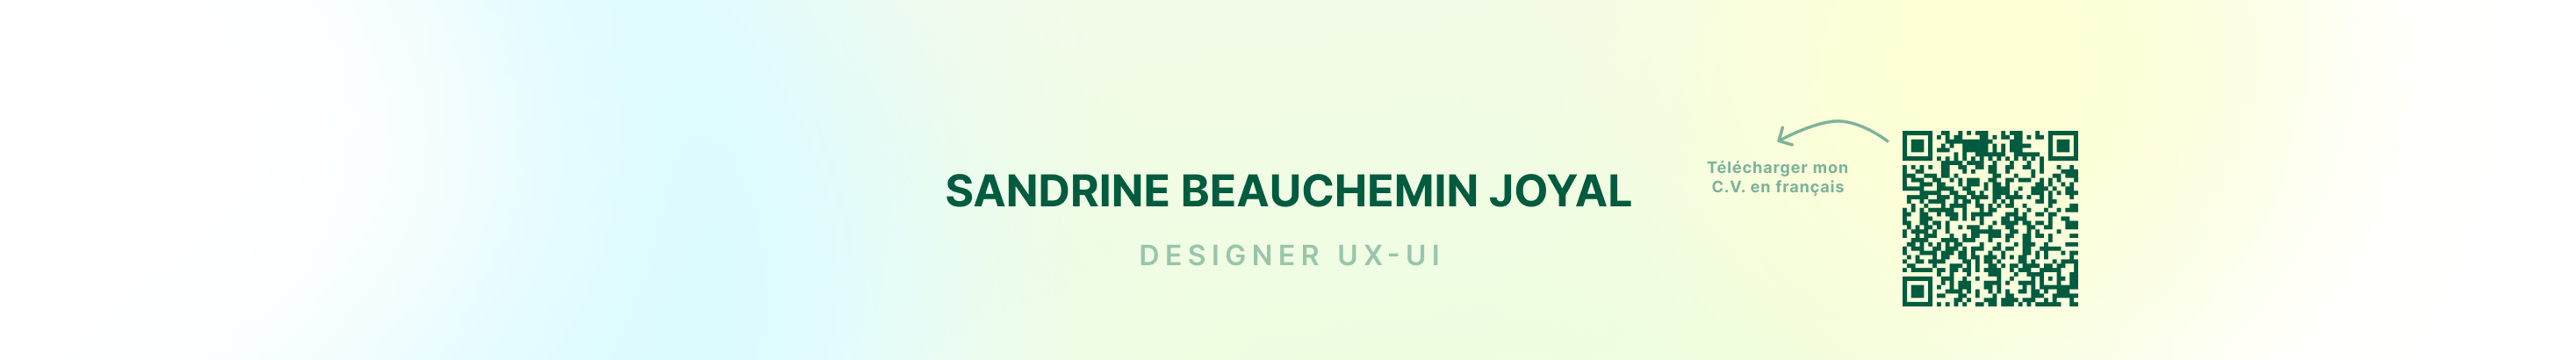 Banner de perfil de Sandrine Beauchemin Joyal